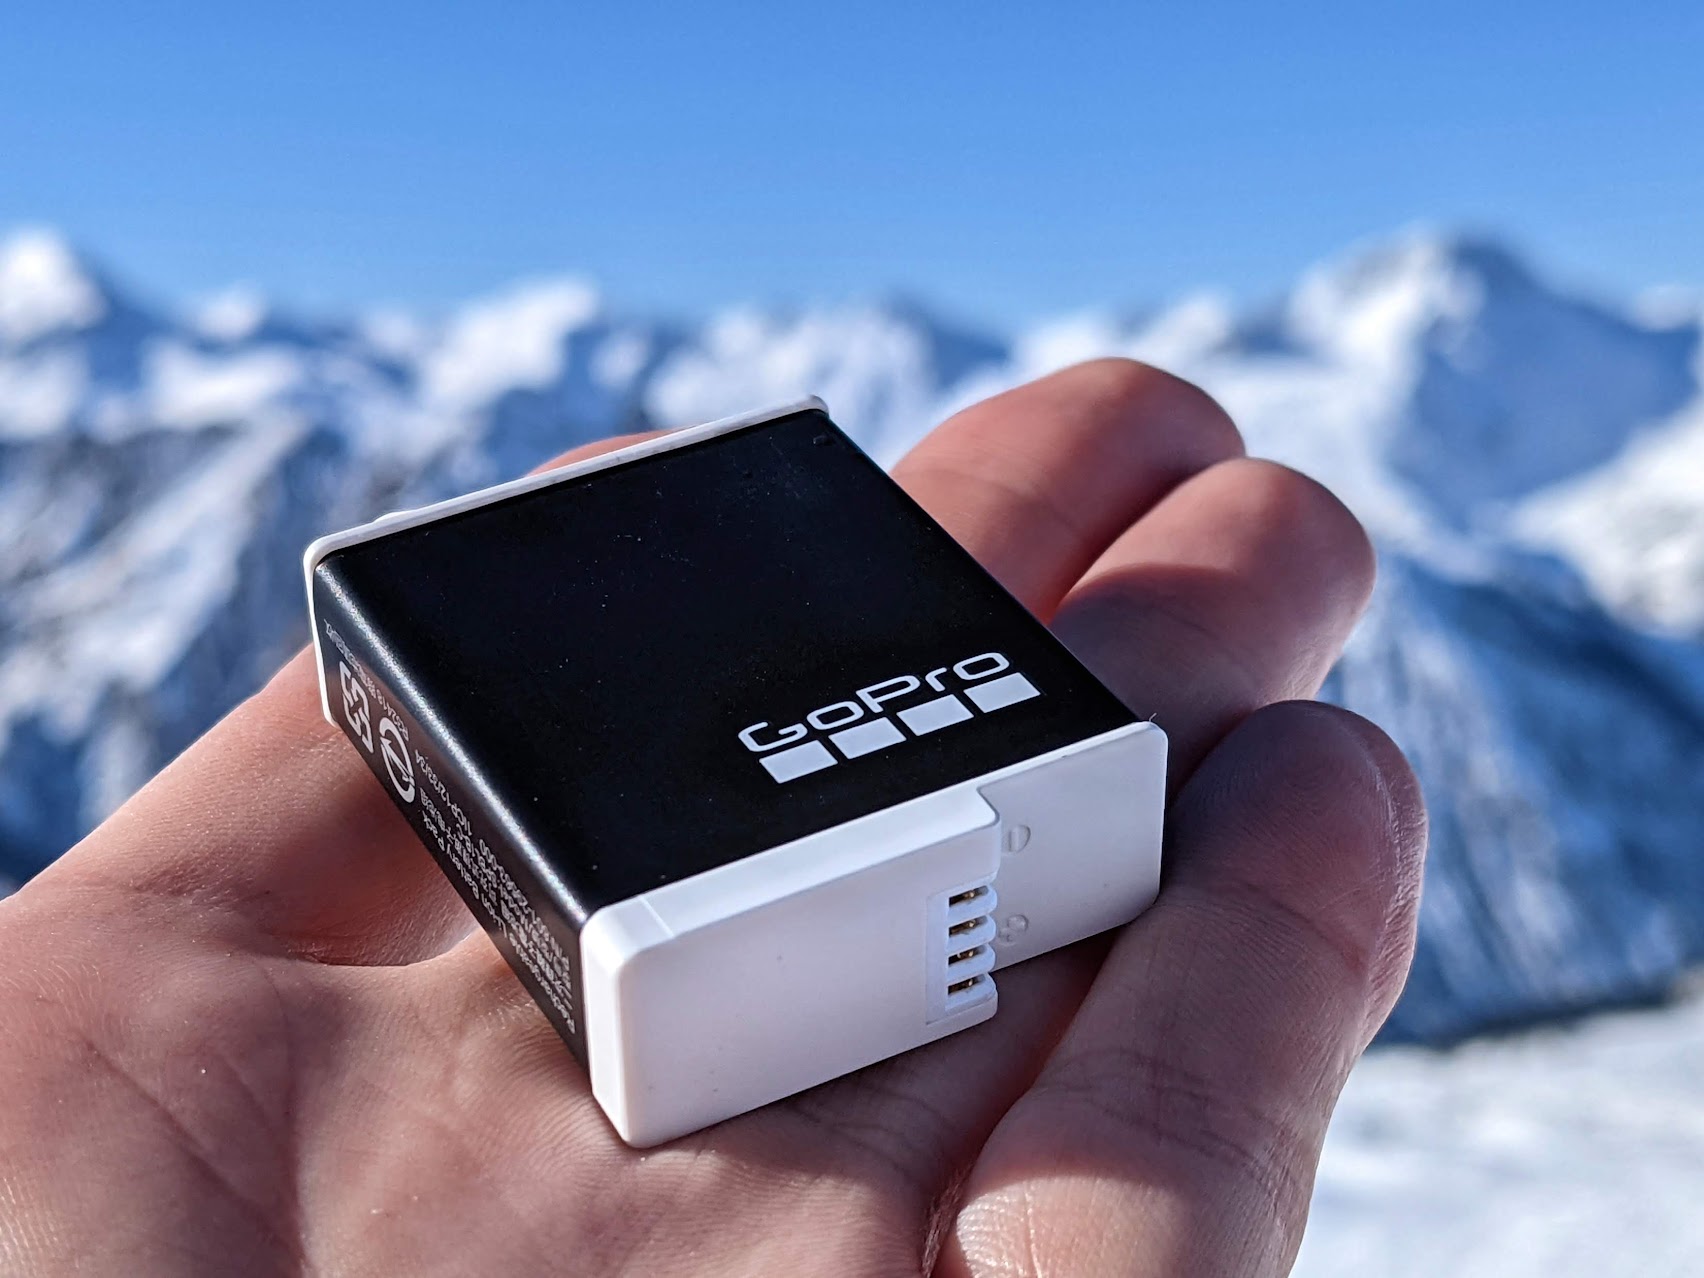 GoPro Batterie Amovible - Digistore